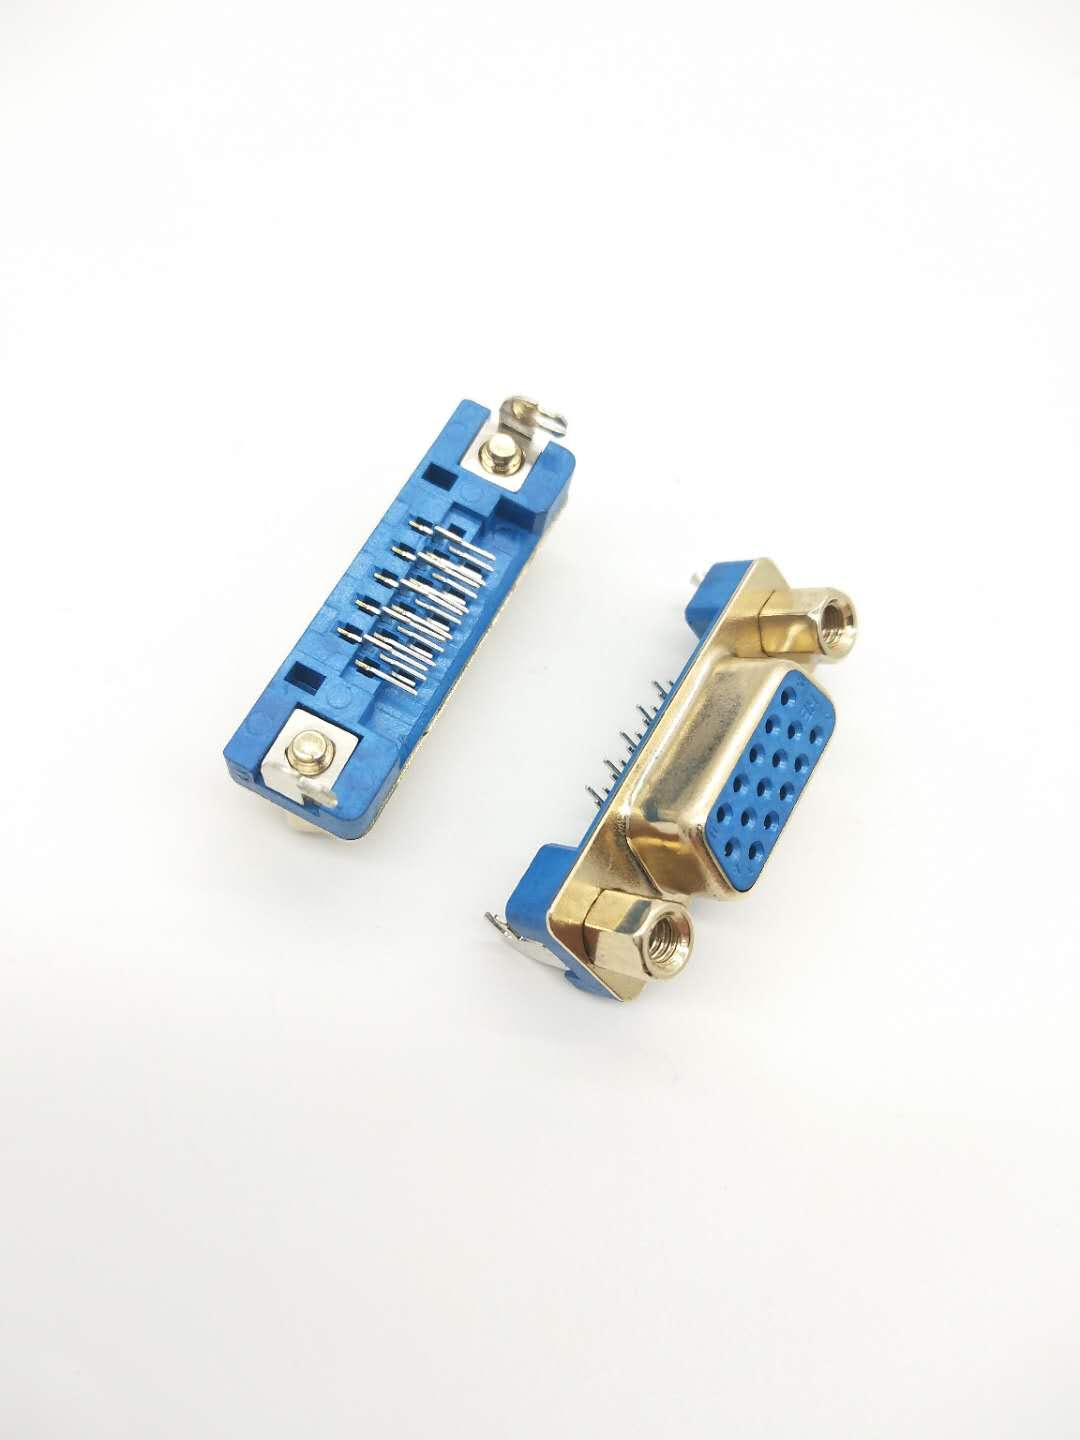 SLIM VGA 15P 正向沉板长体 蓝LCP 铁壳镀金 端子镀金 锁4.8锁丝